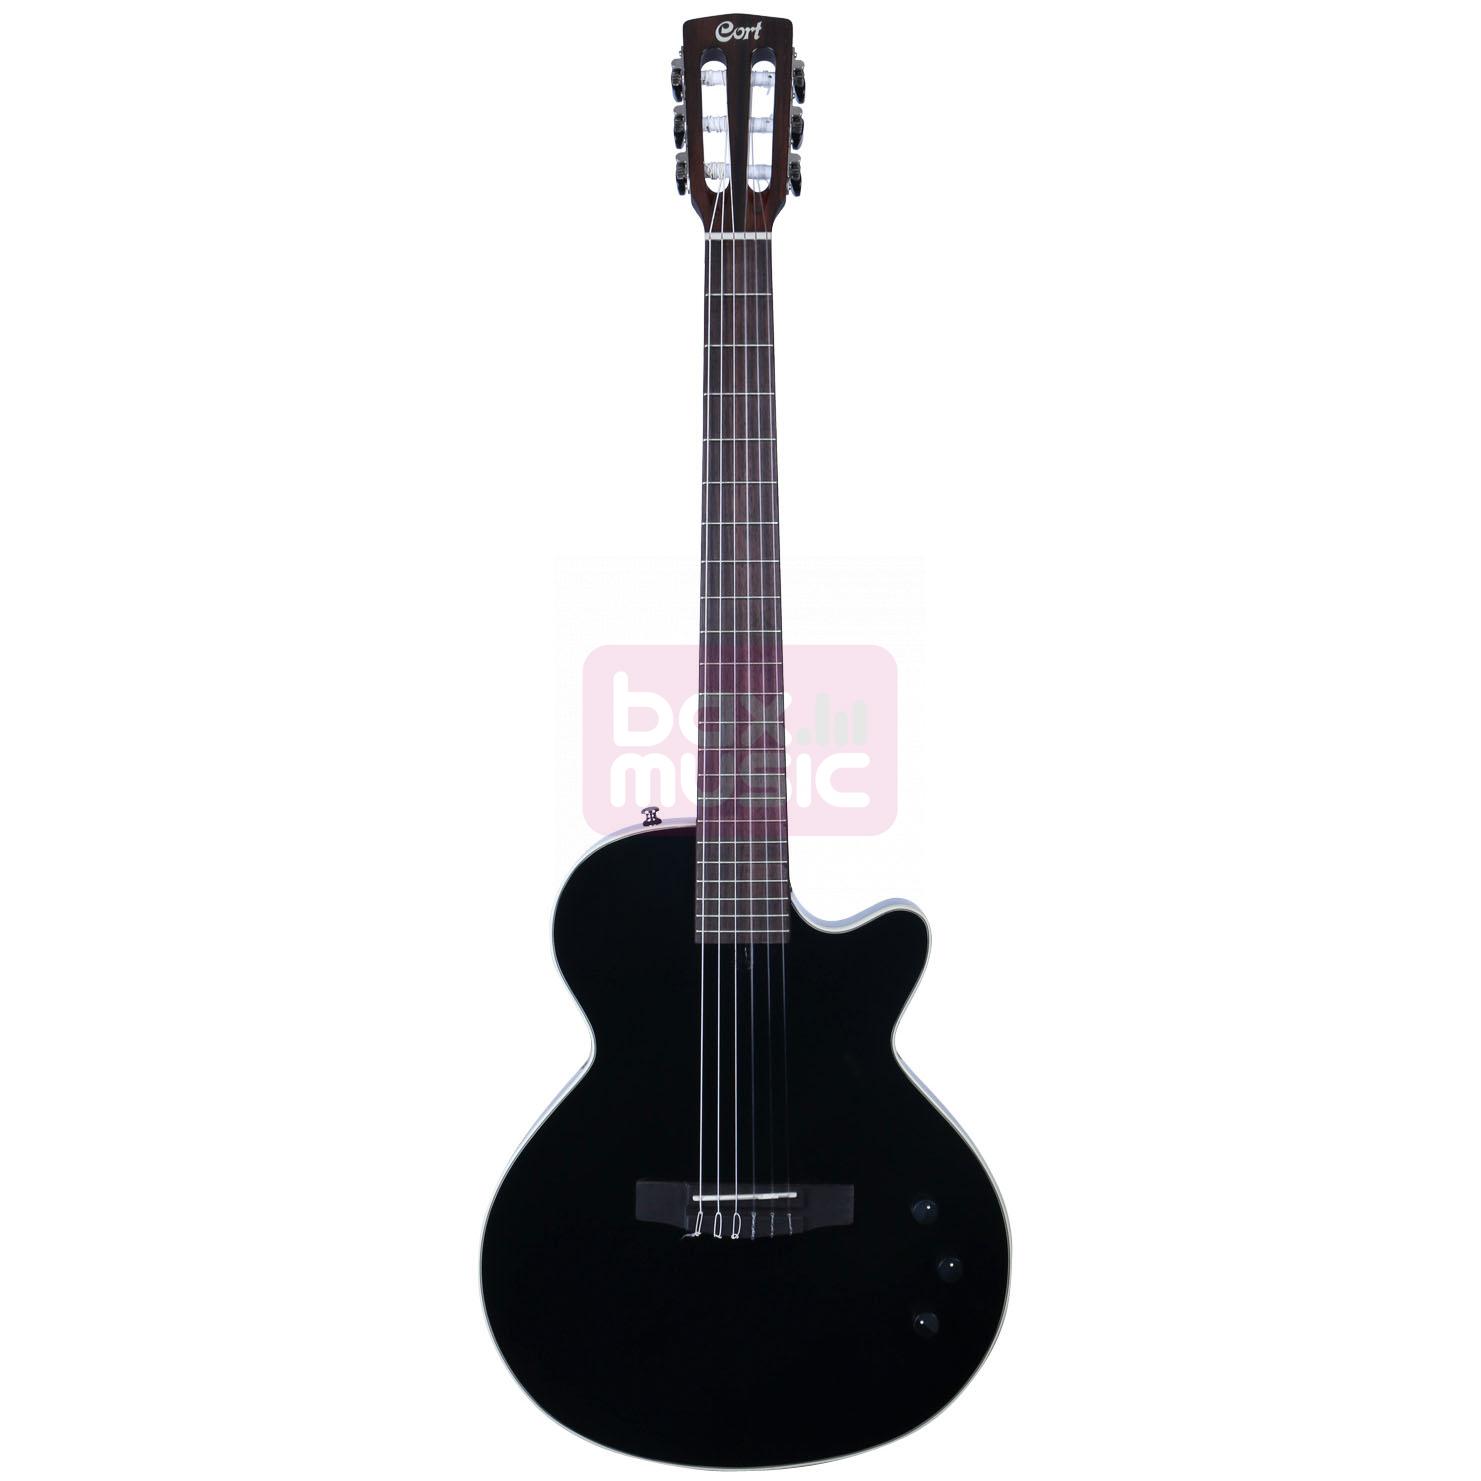 Cort Sunset Nylectric BK E/A klassieke gitaar zwart